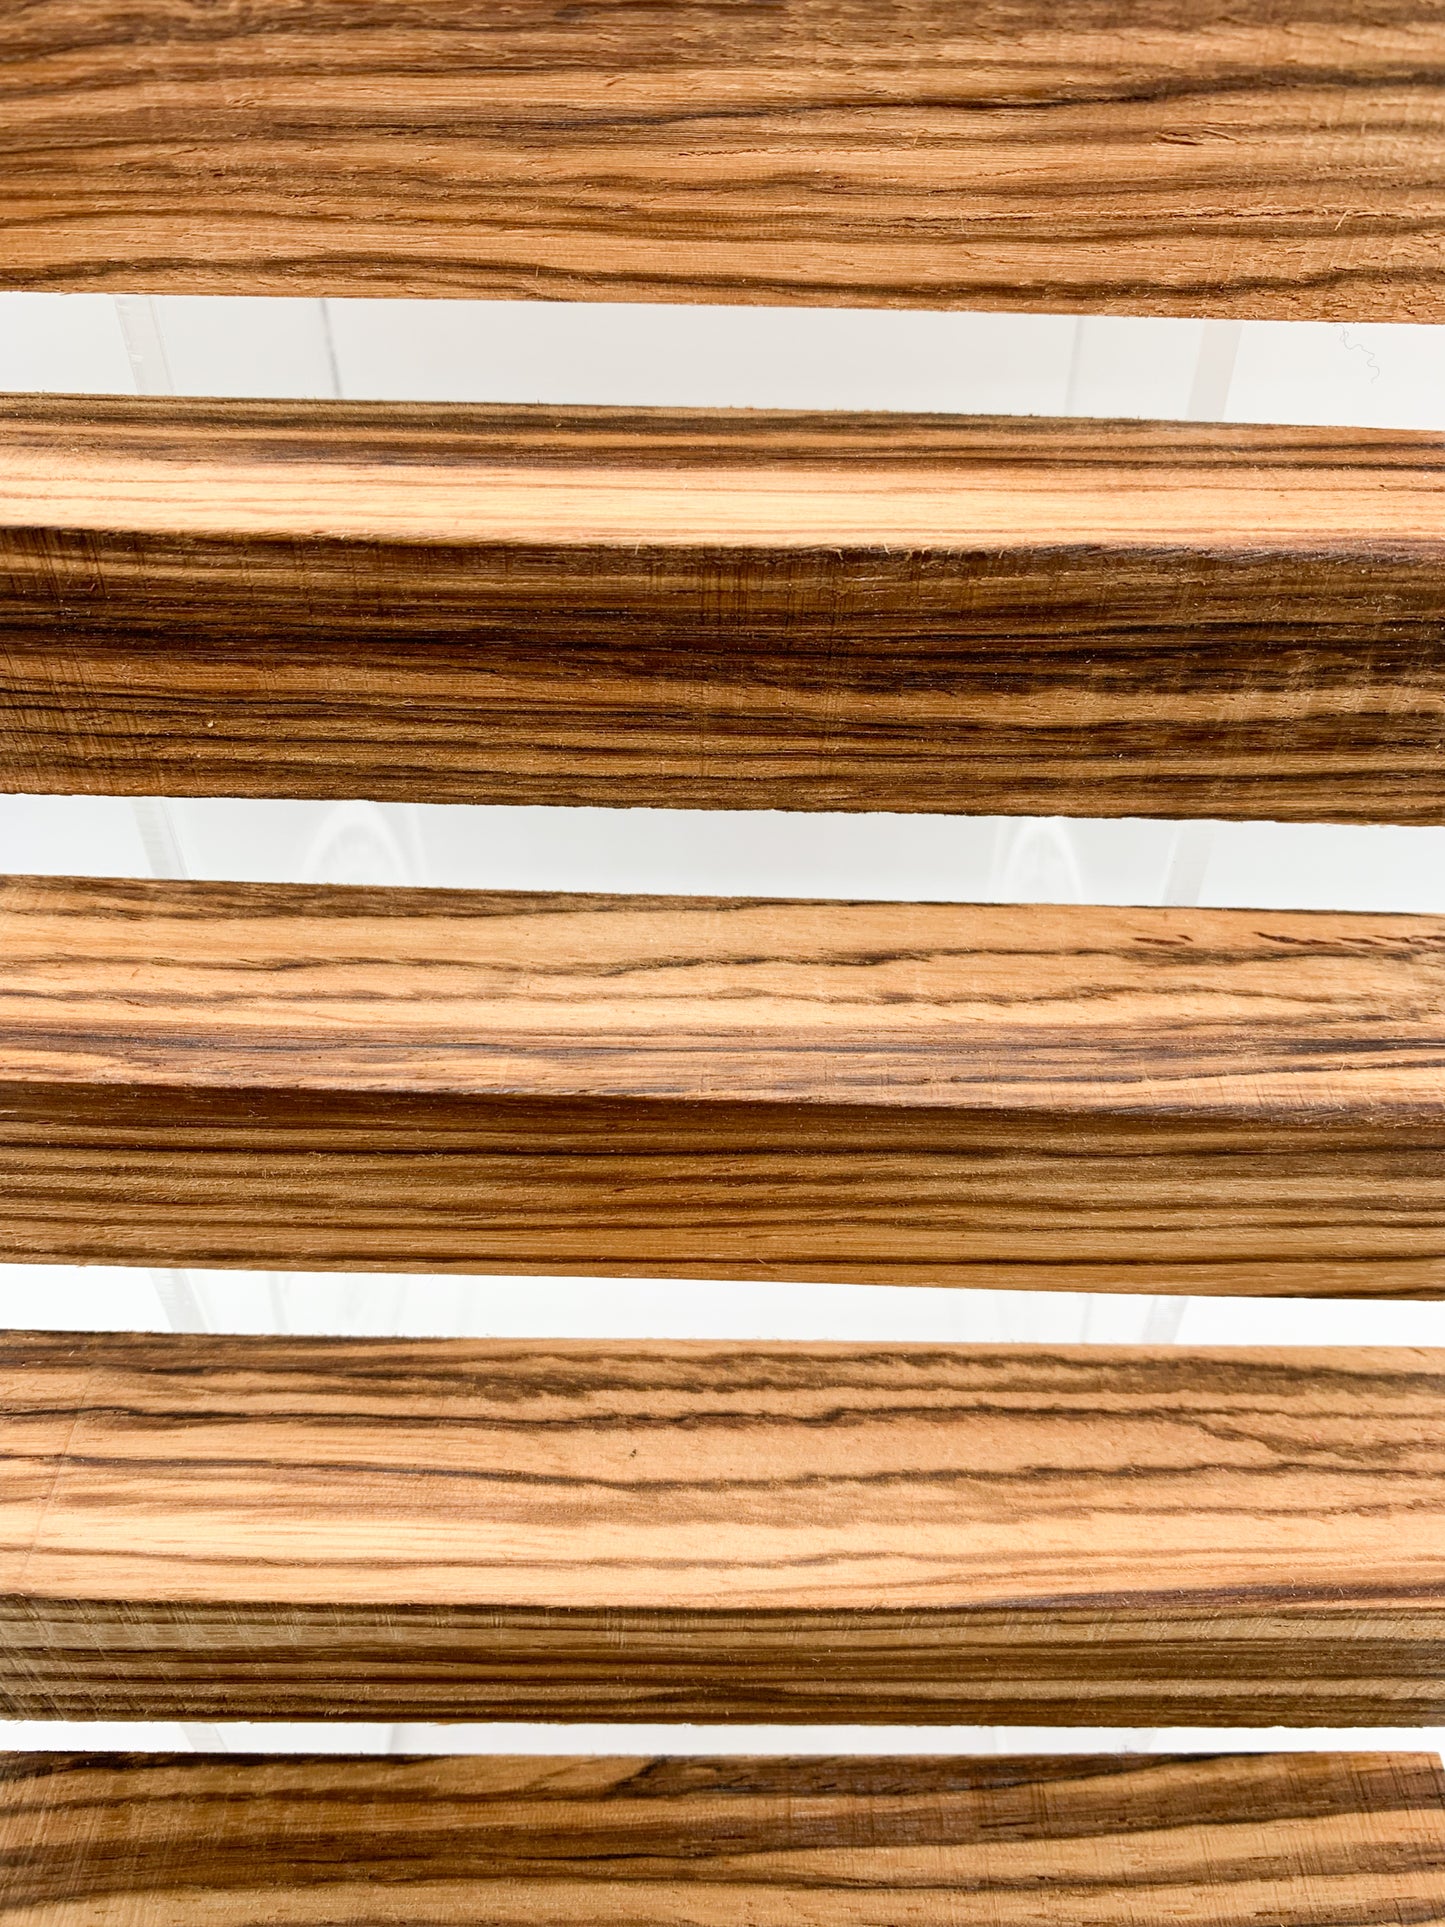 Zebrano Wood | aka Zebrawood | Wooden Pen Blanks